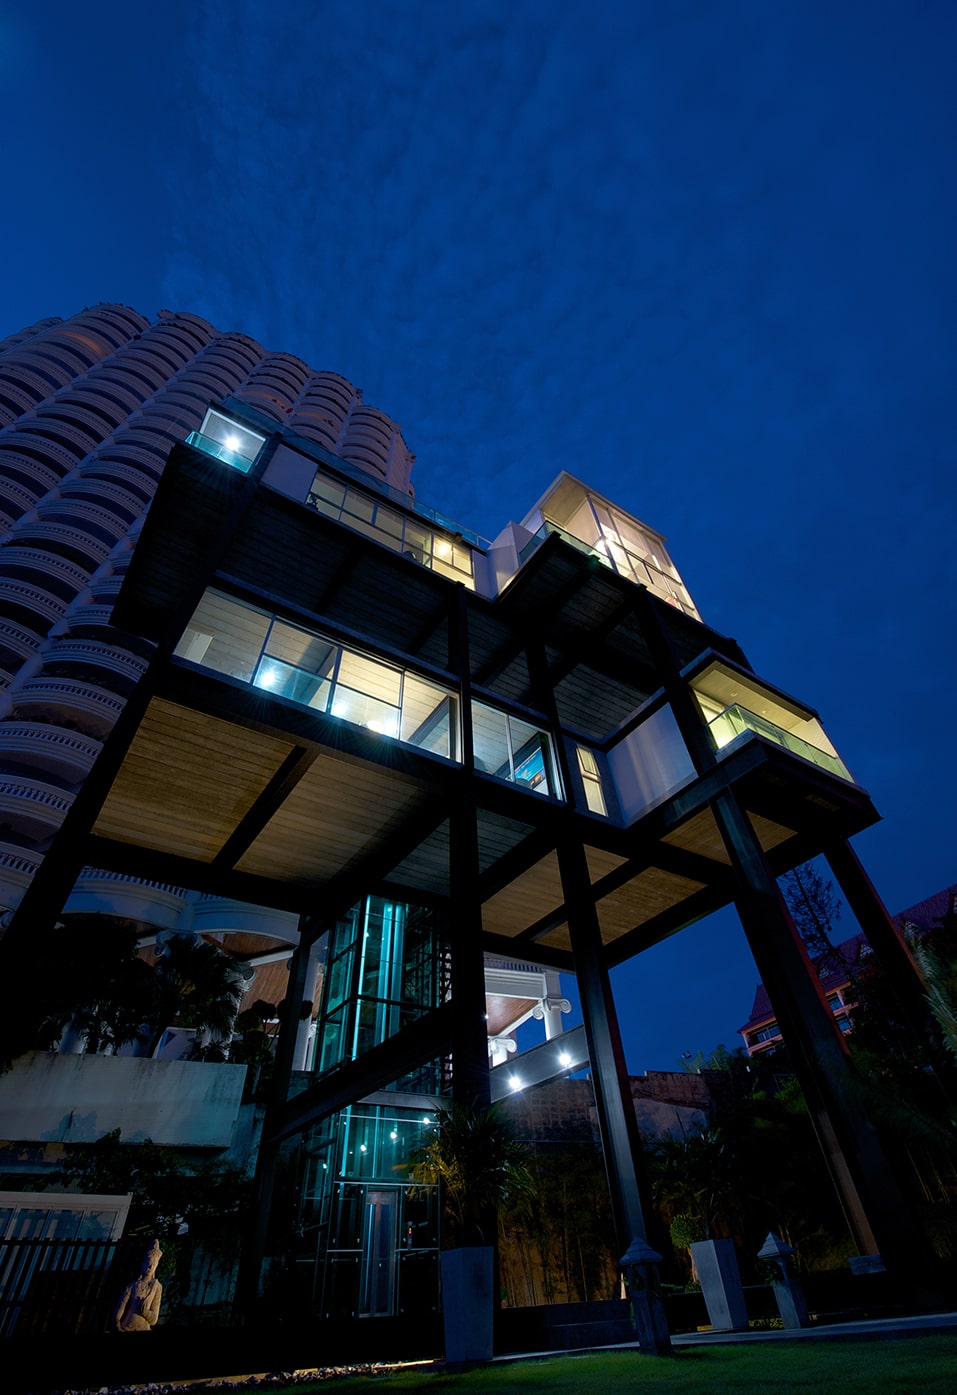 Showroom Wong Amat Tower designed by architect Mario Kleff